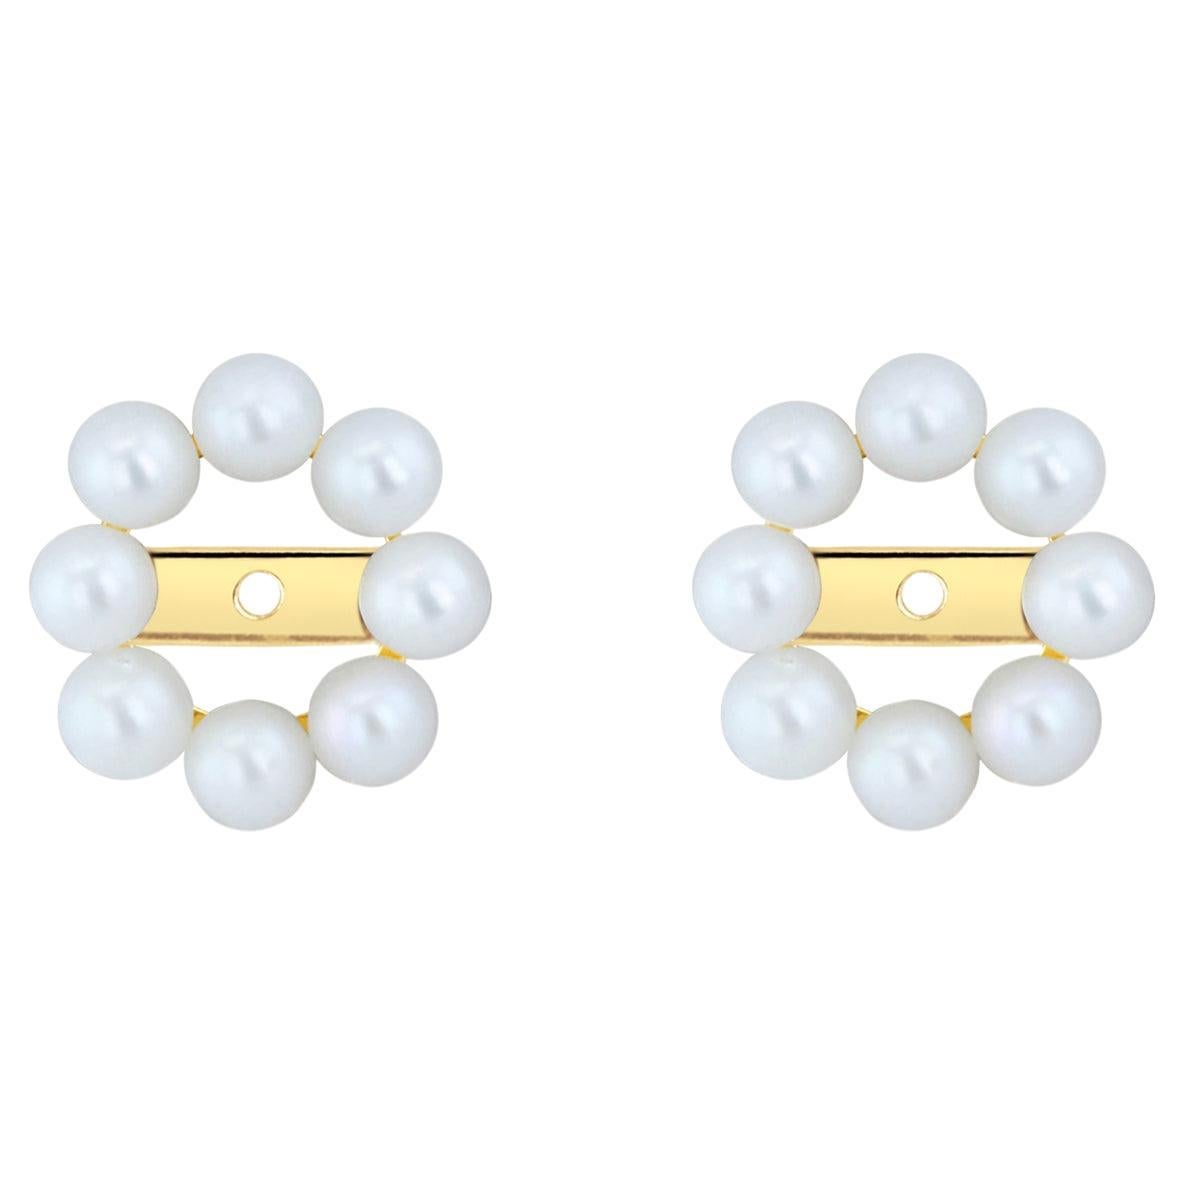 3MM Pearl Earring Jackets in 14k Yellow Gold